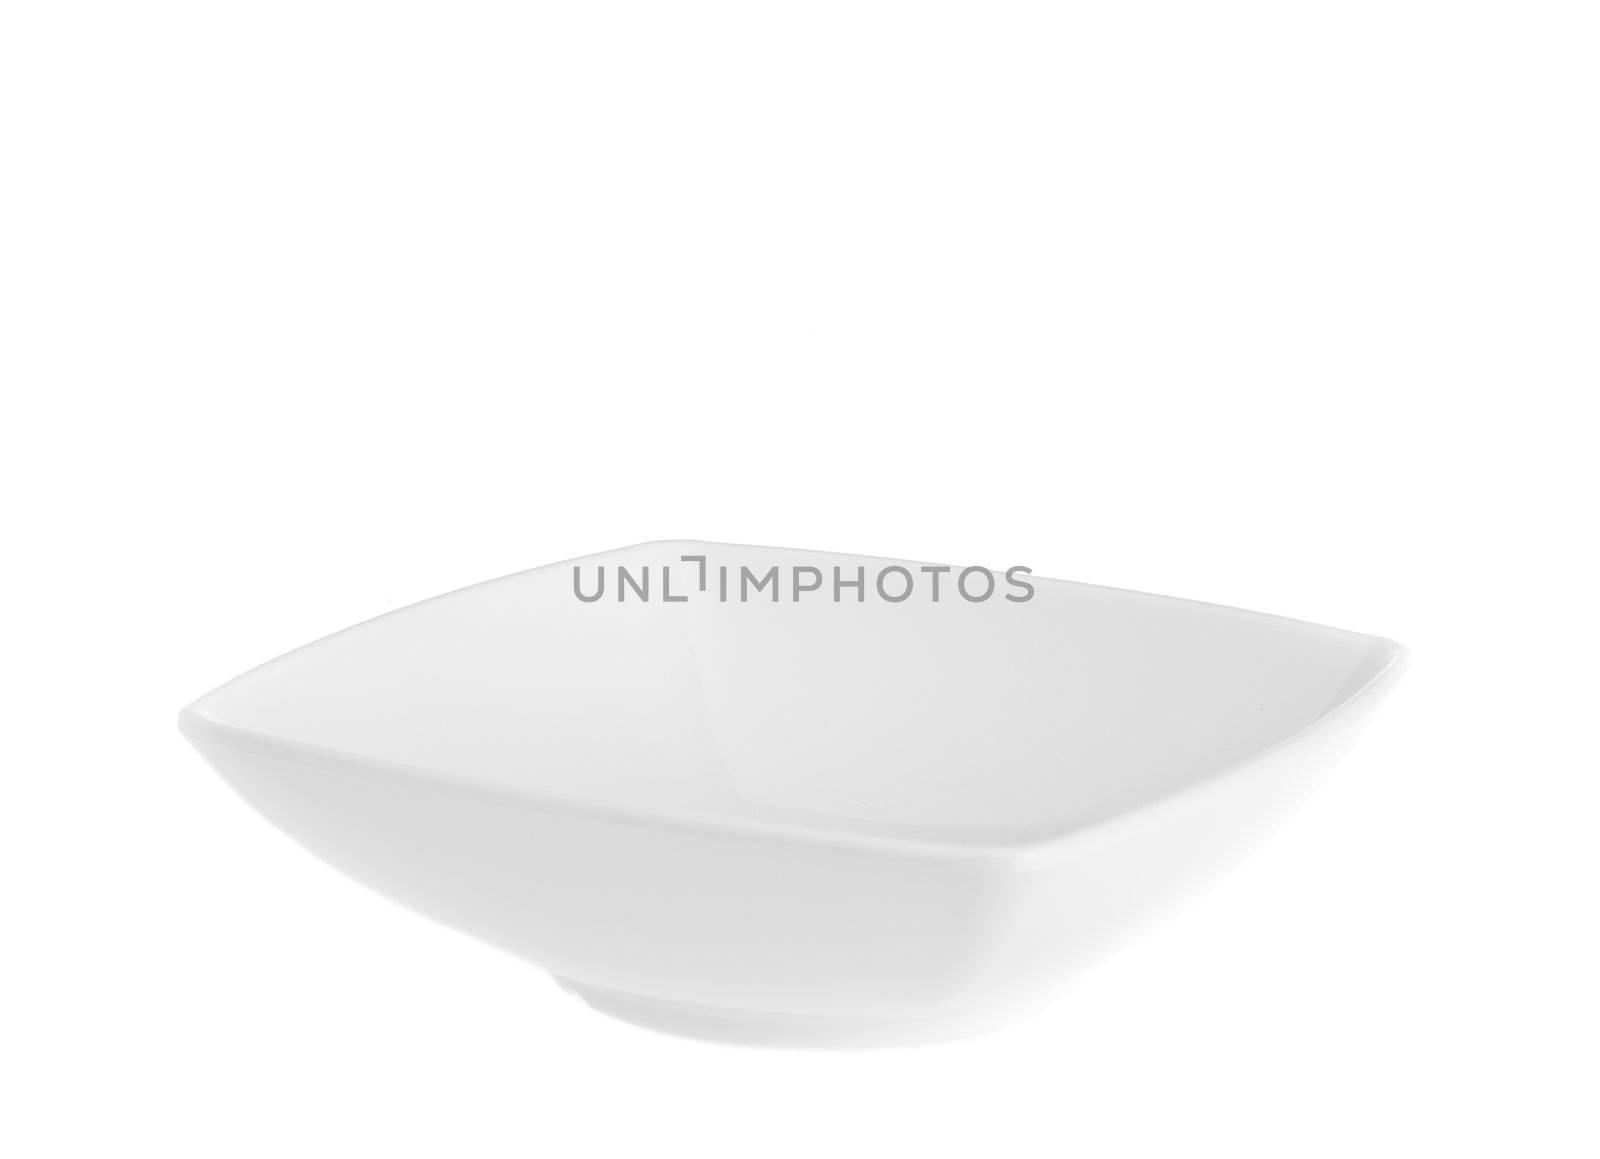 Stack of plain white dinner plates isolated on white background